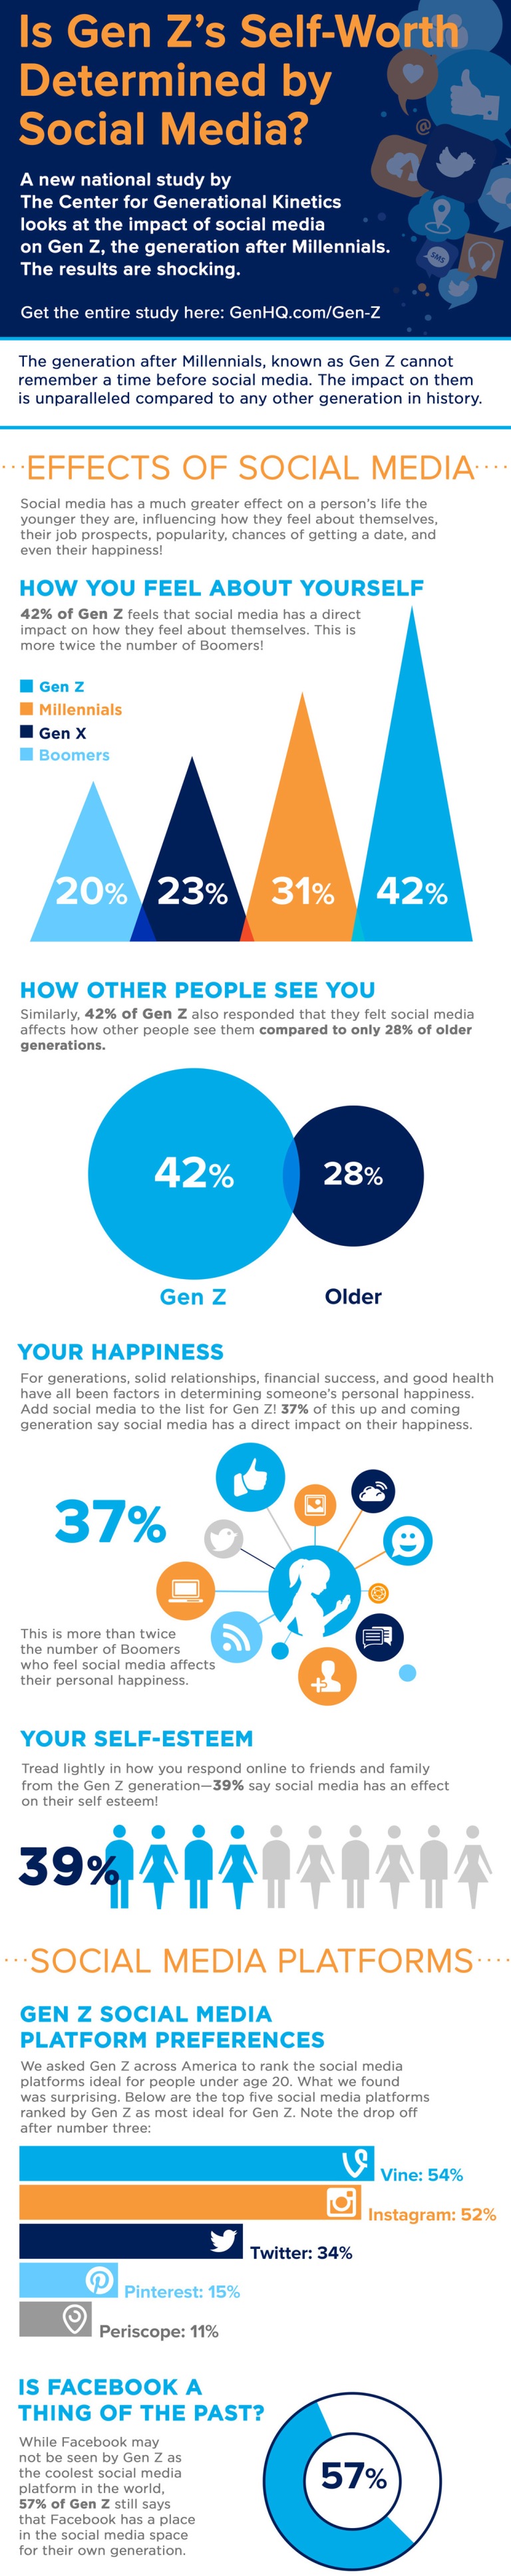 Infographic-Gen-Z-Social-Media-c-2016-The-Center-for-Generational-Kinetics